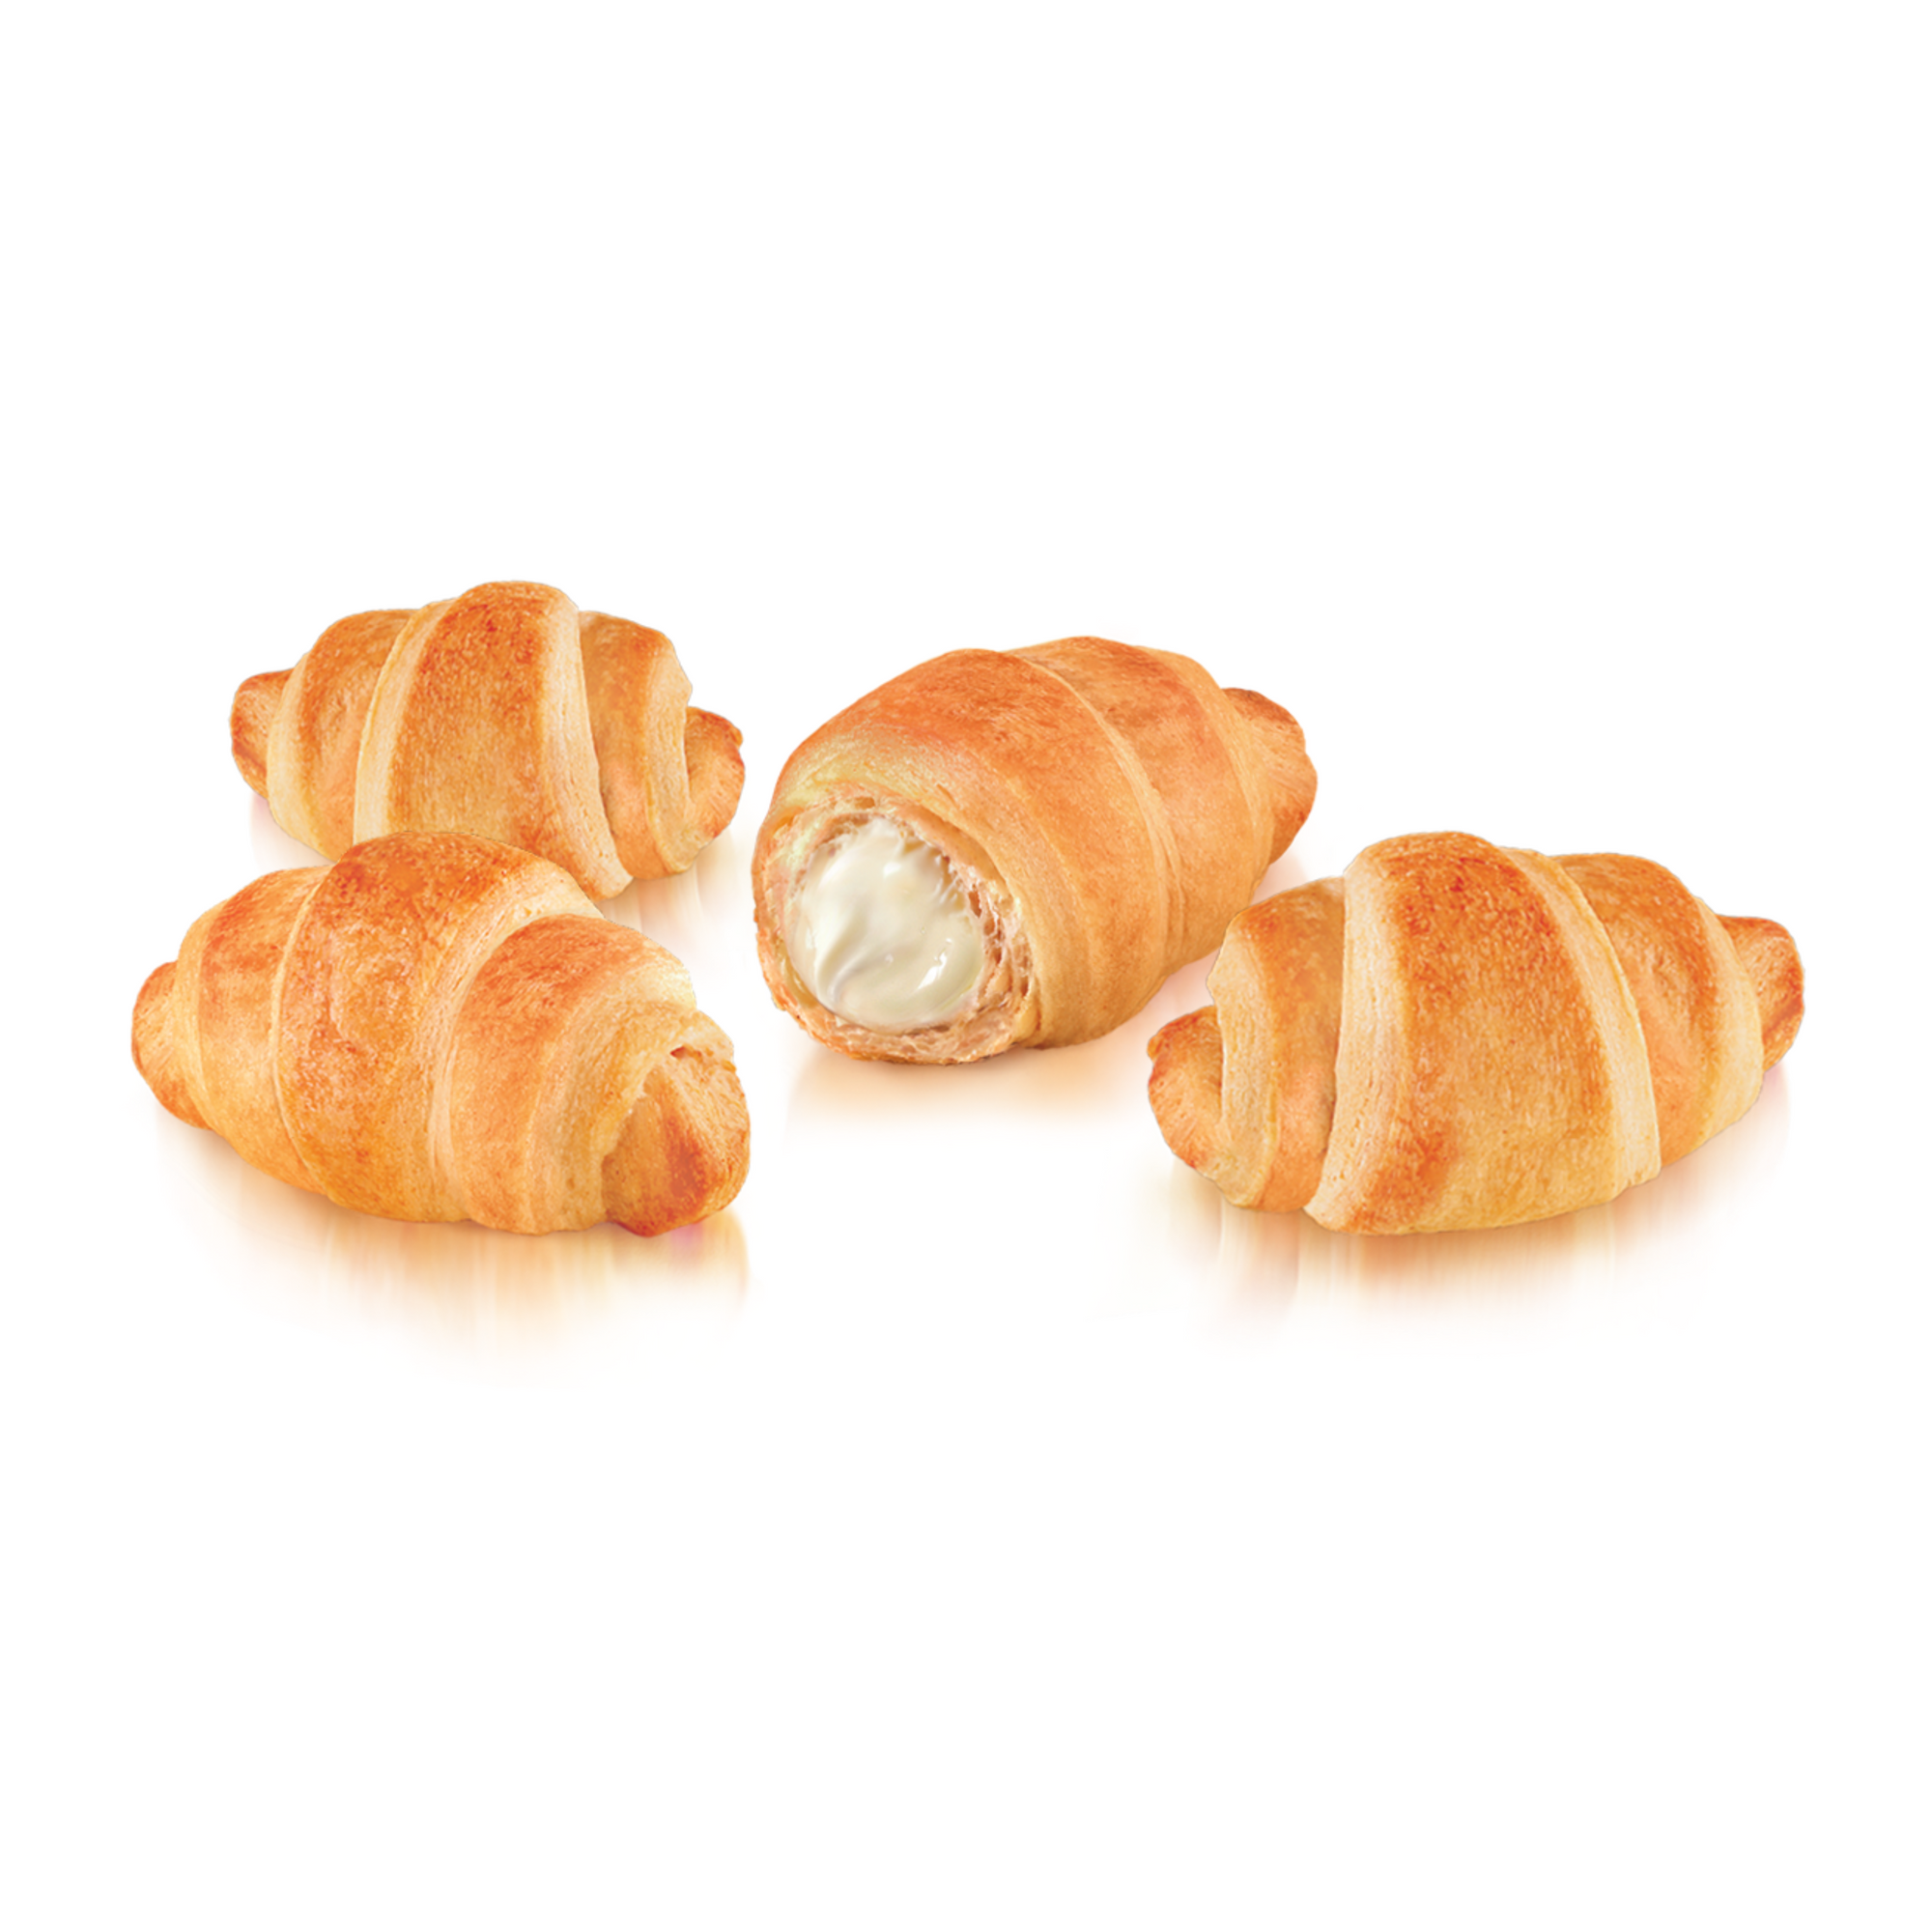 vanilla mini croissants pack of 10 or 30